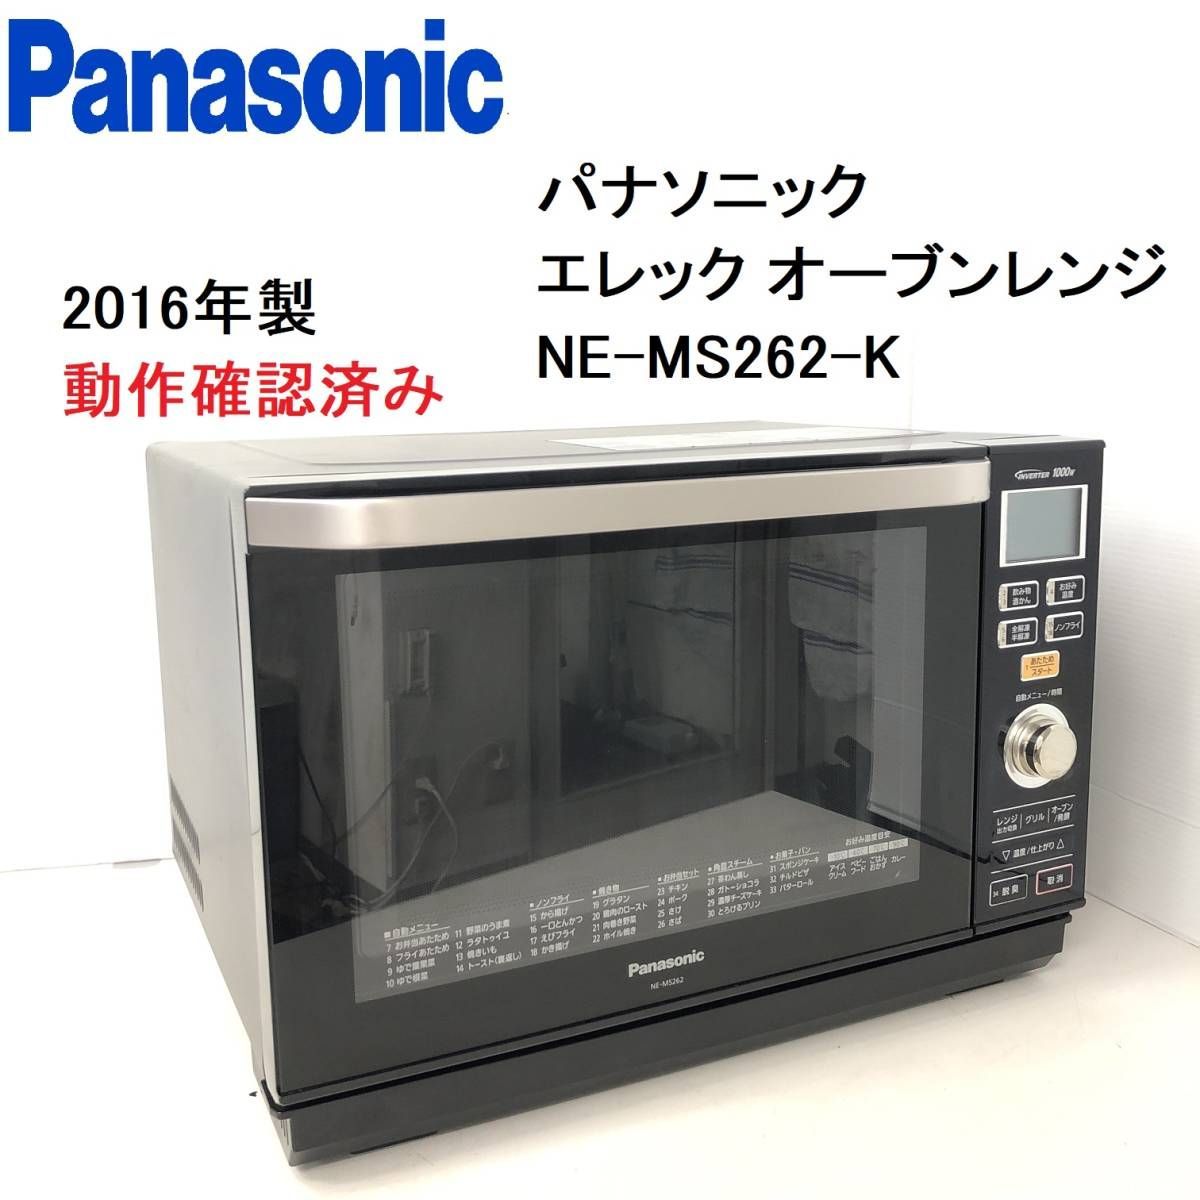 Panasonicのオーブンレンジ NE-MS263 - 電子レンジ・オーブン